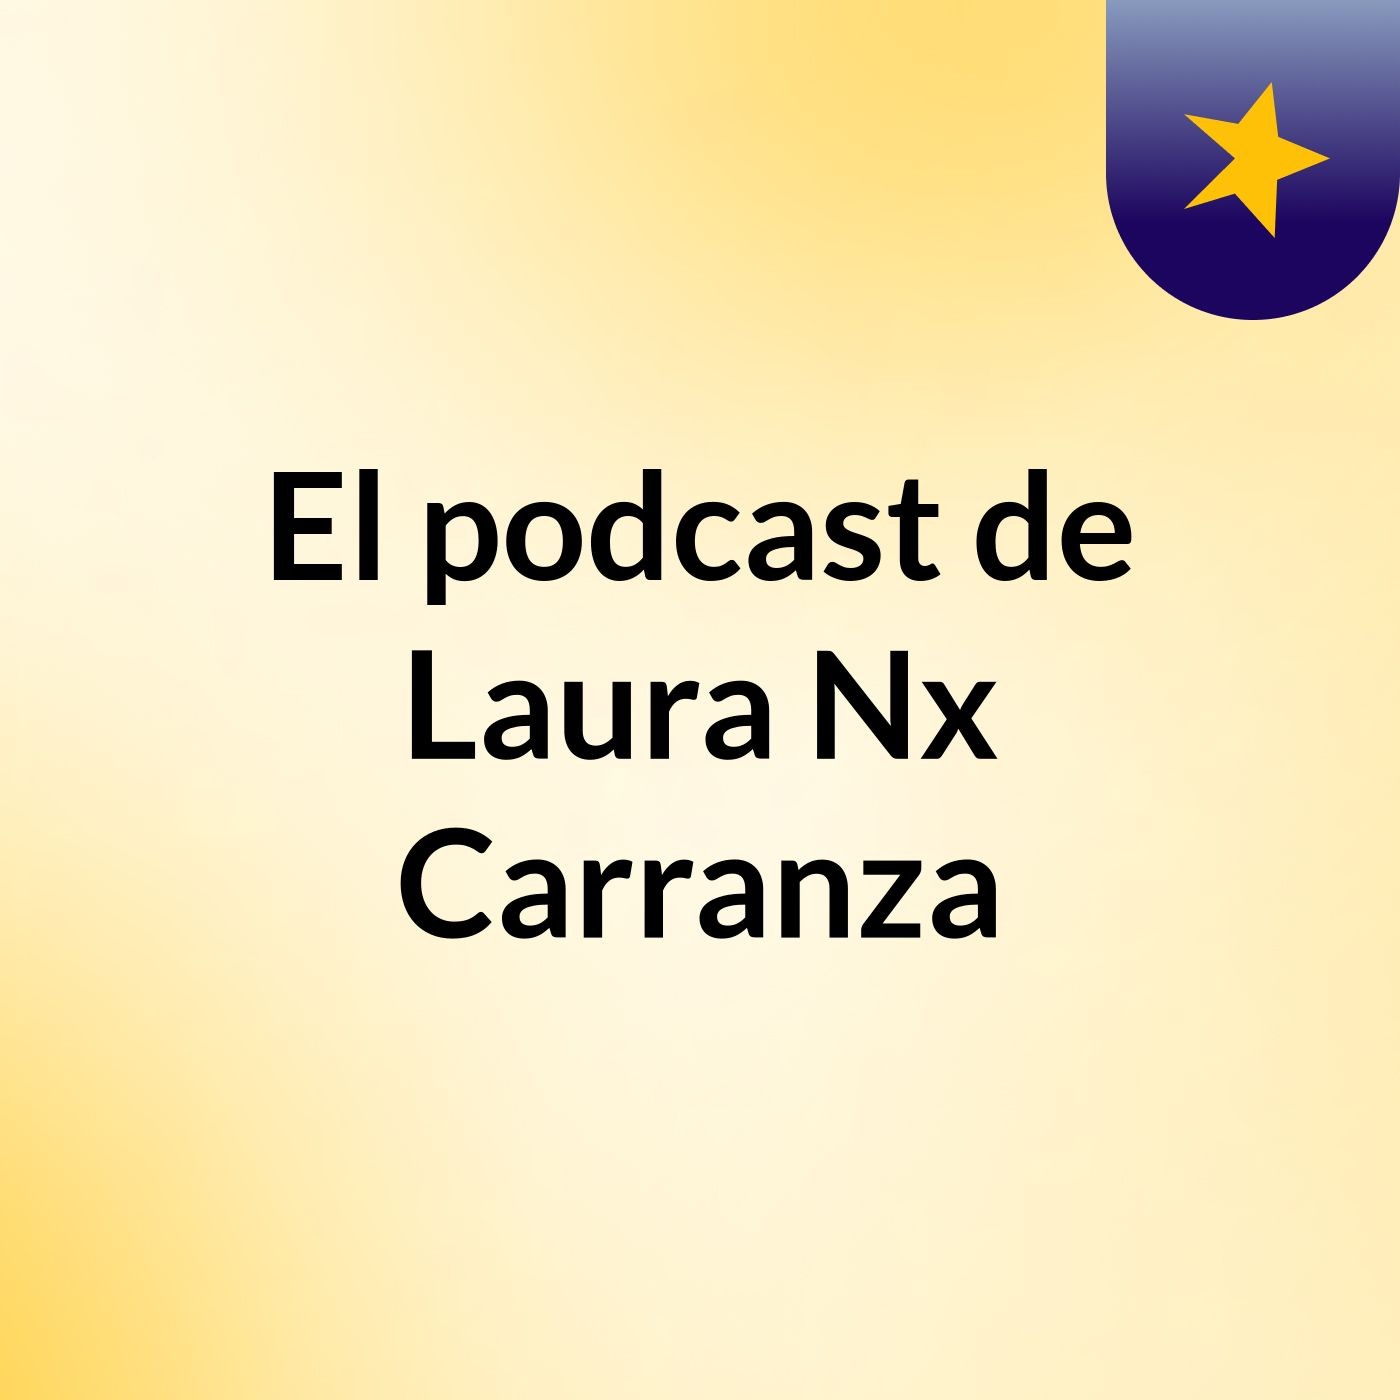 Episodio 2 - El podcast de Laura Nx Carranza